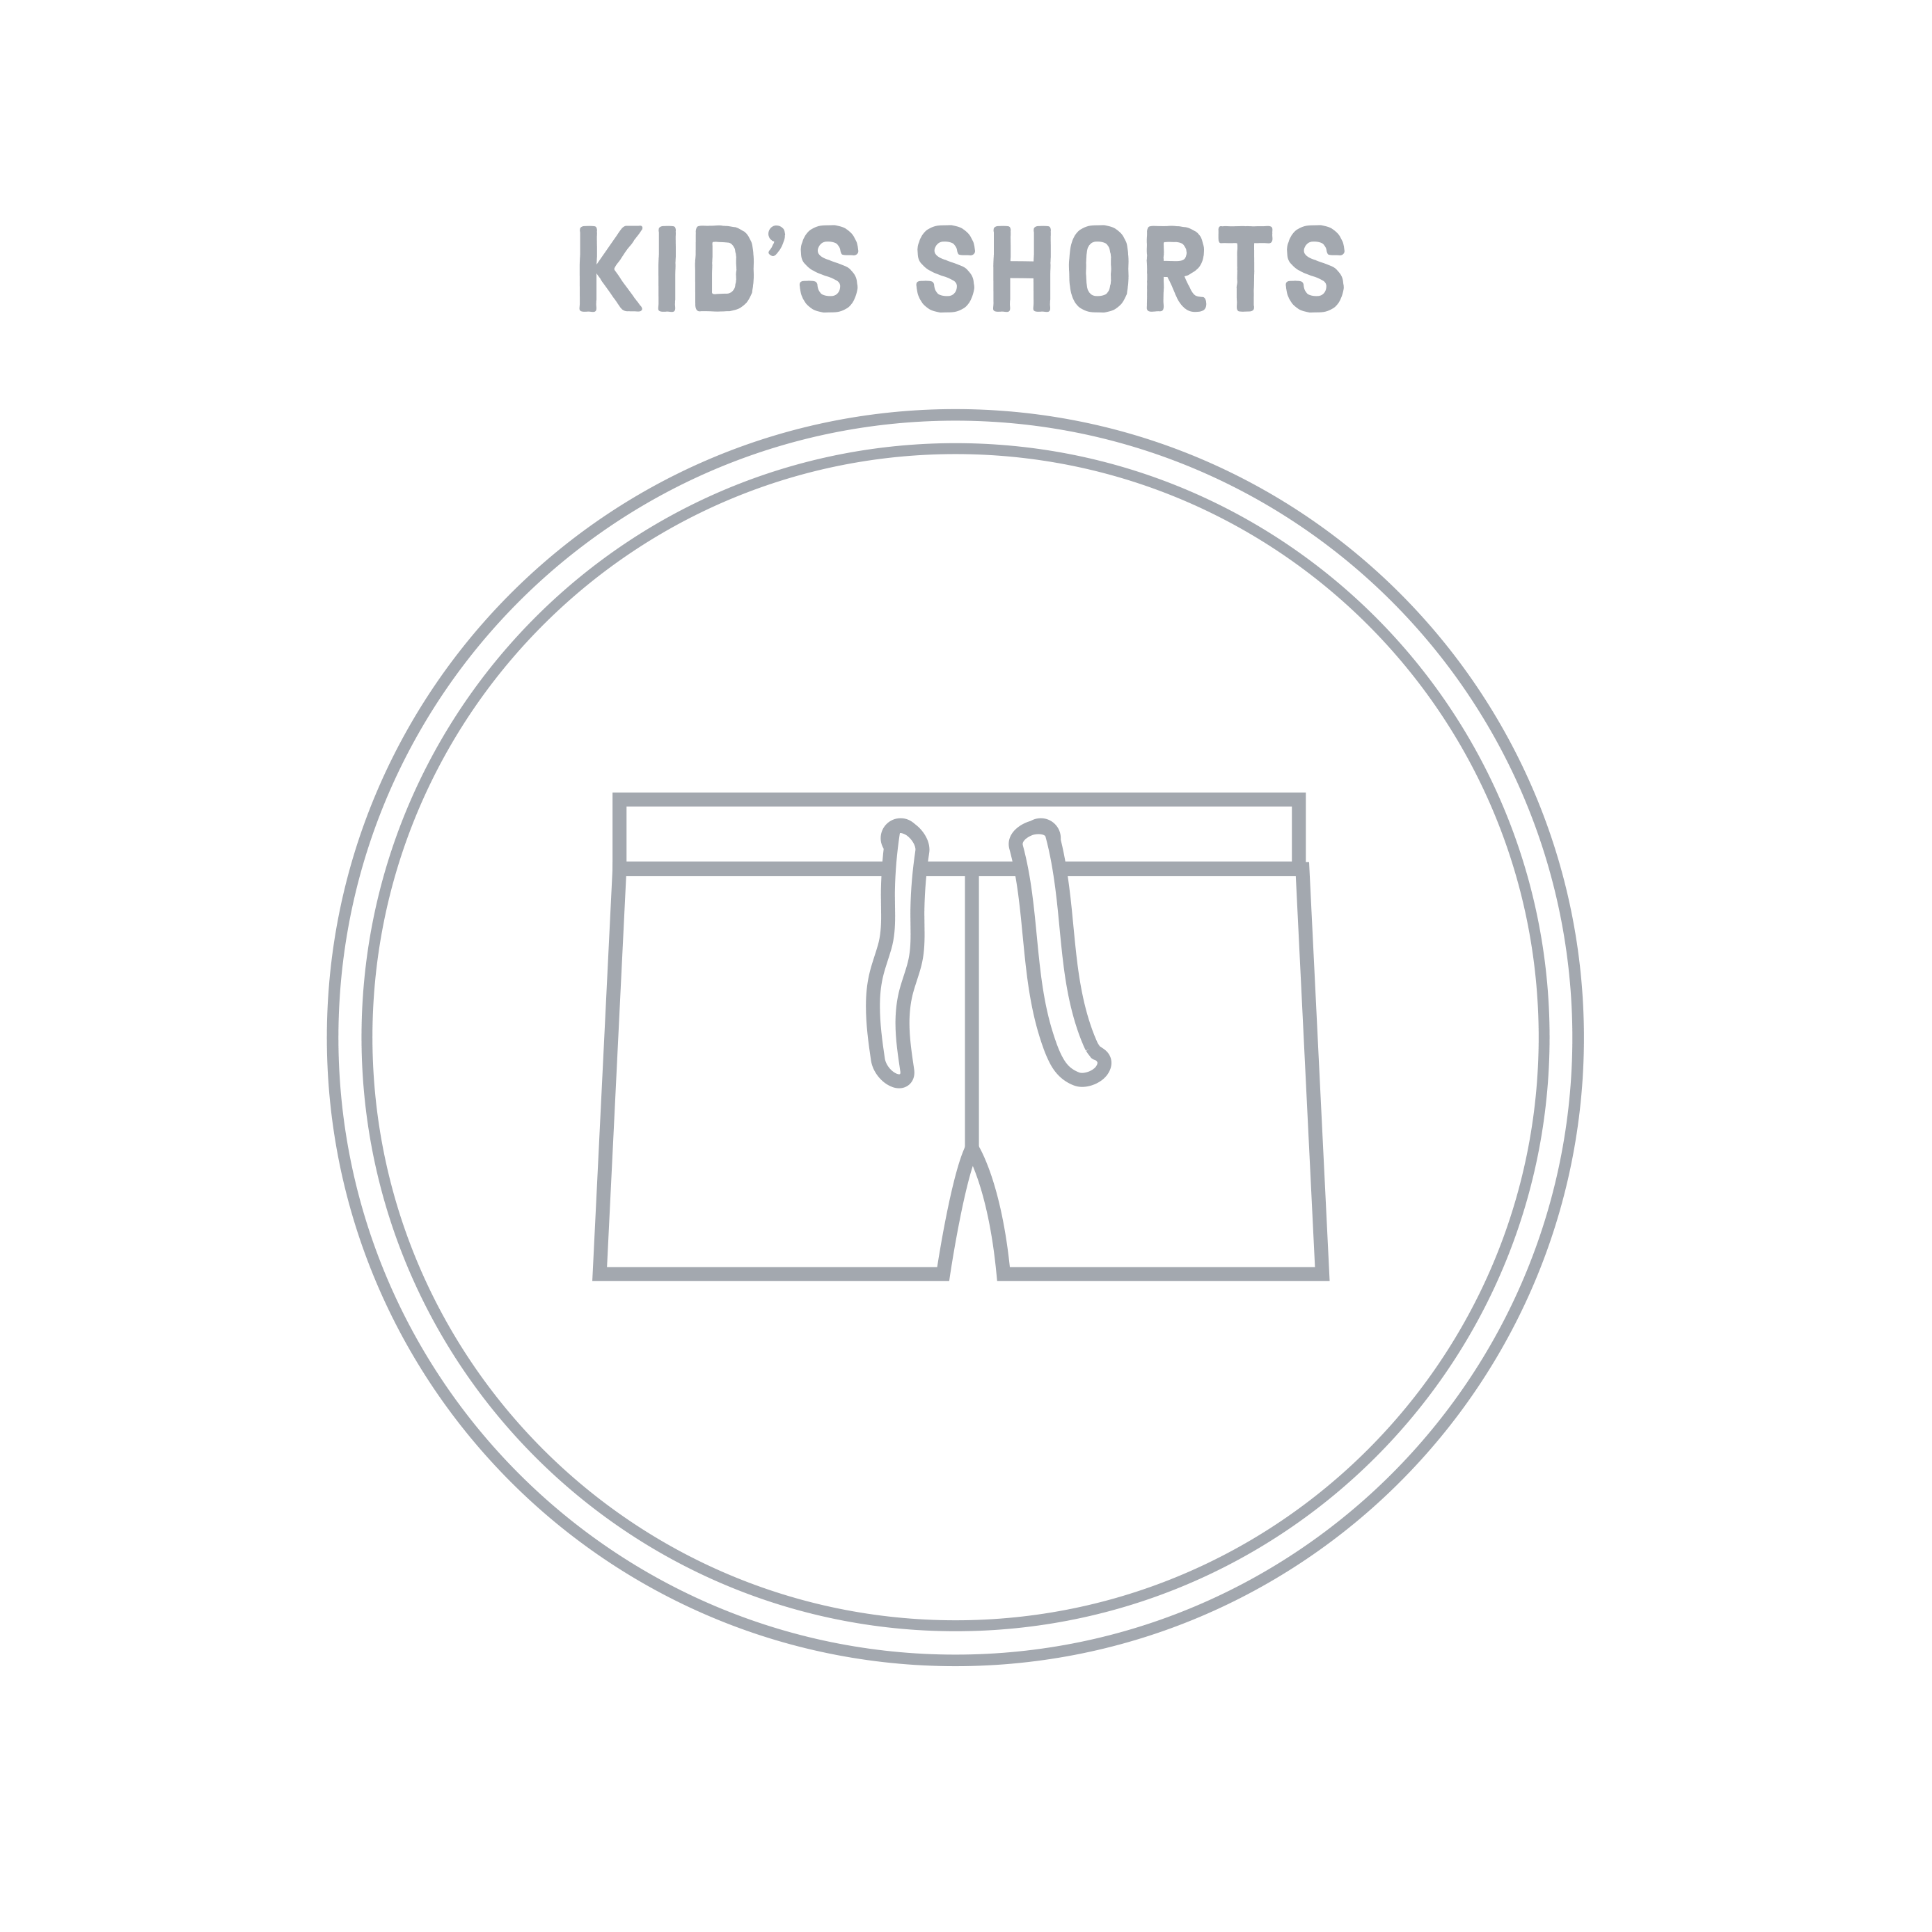 Kid's Shorts